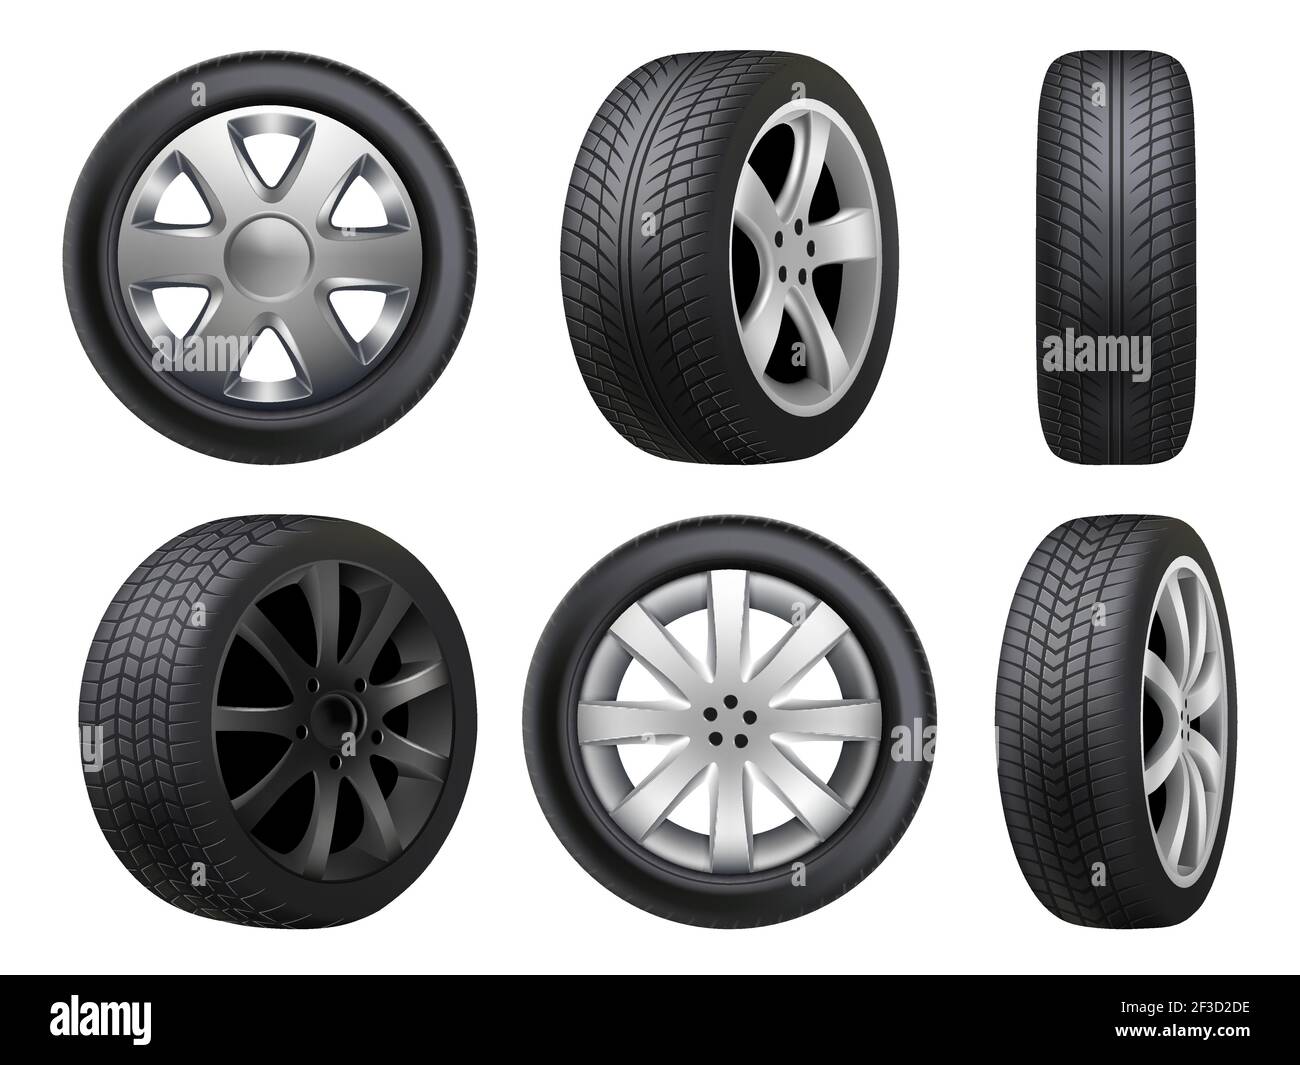 Räder realistisch. Reifen Straßenpflege Vektor Automobil 3D Automobil-Artikel Sammlung Stock Vektor